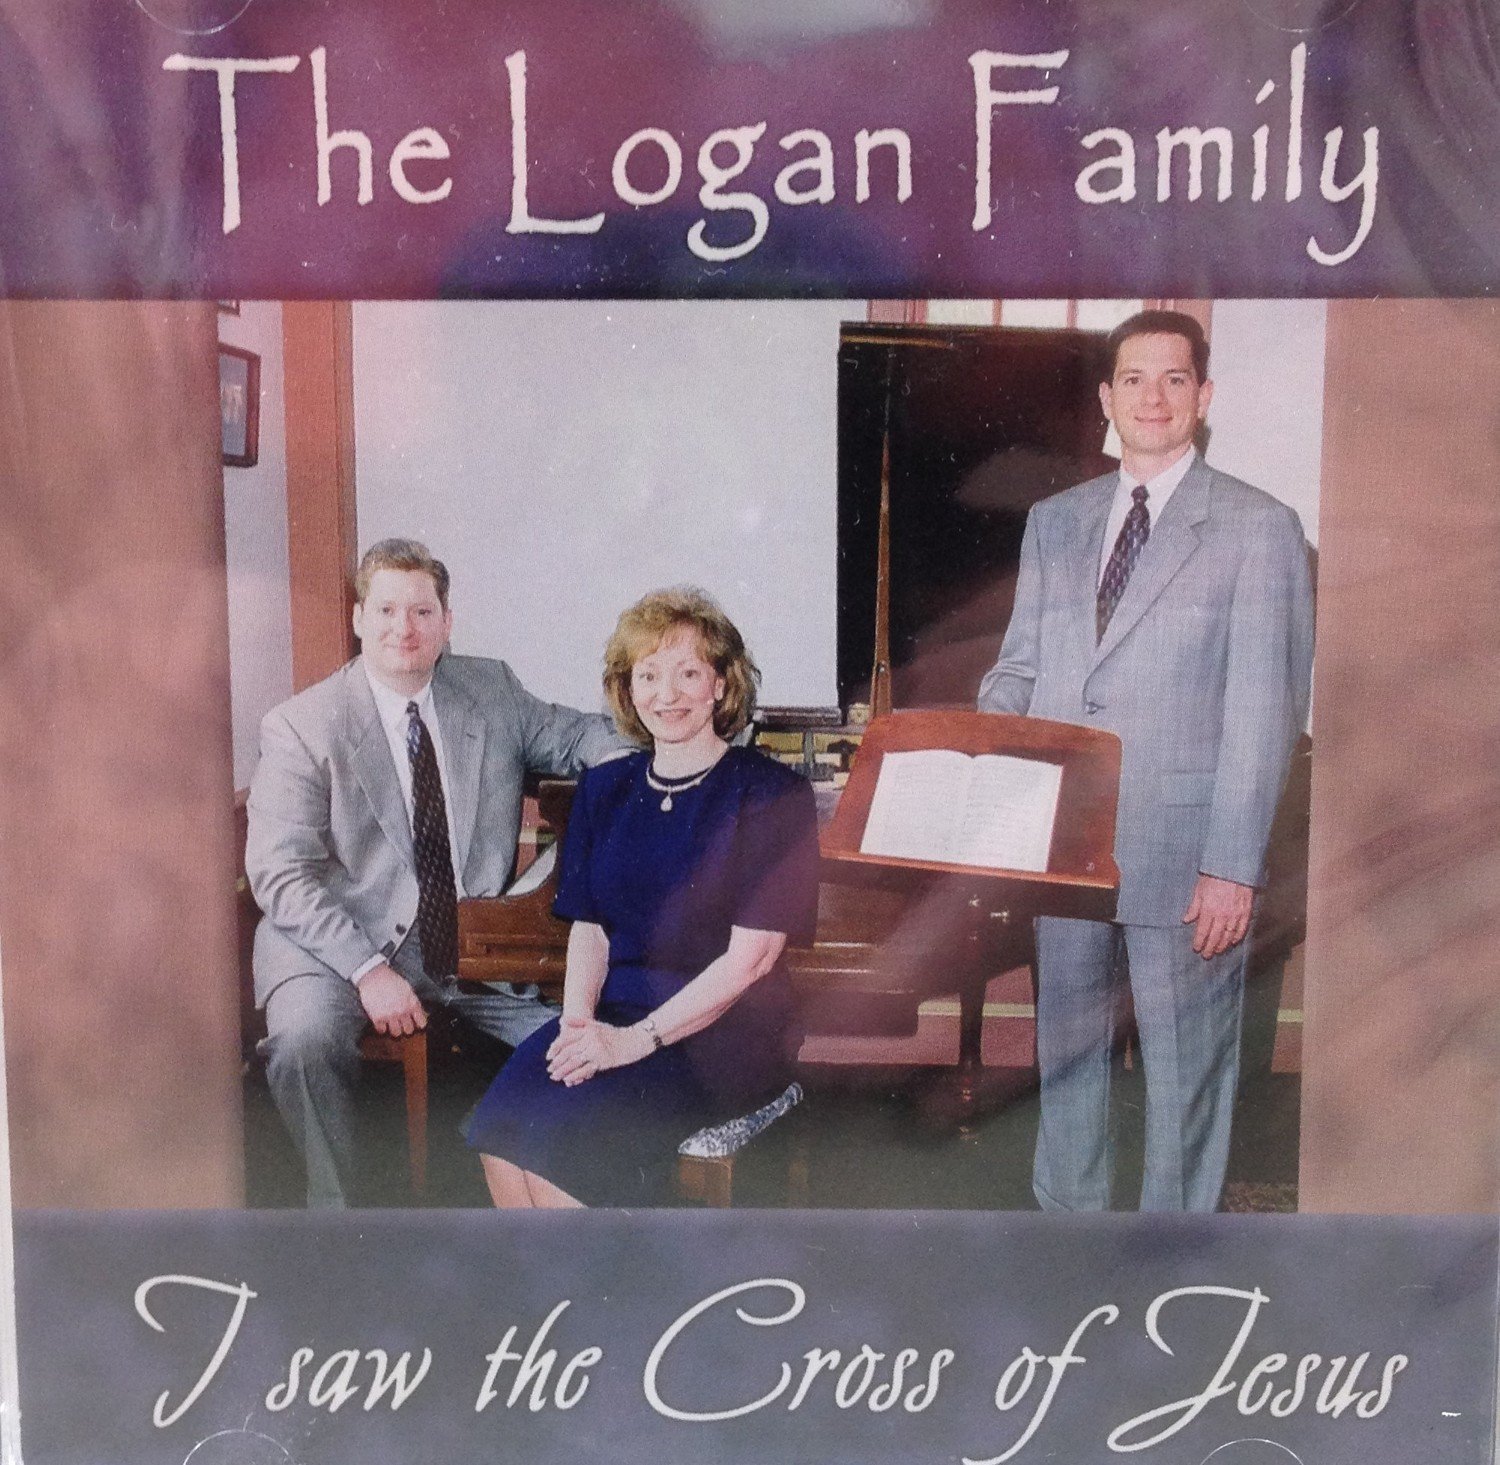 The Logan Family:  I saw the Cross of Jesus